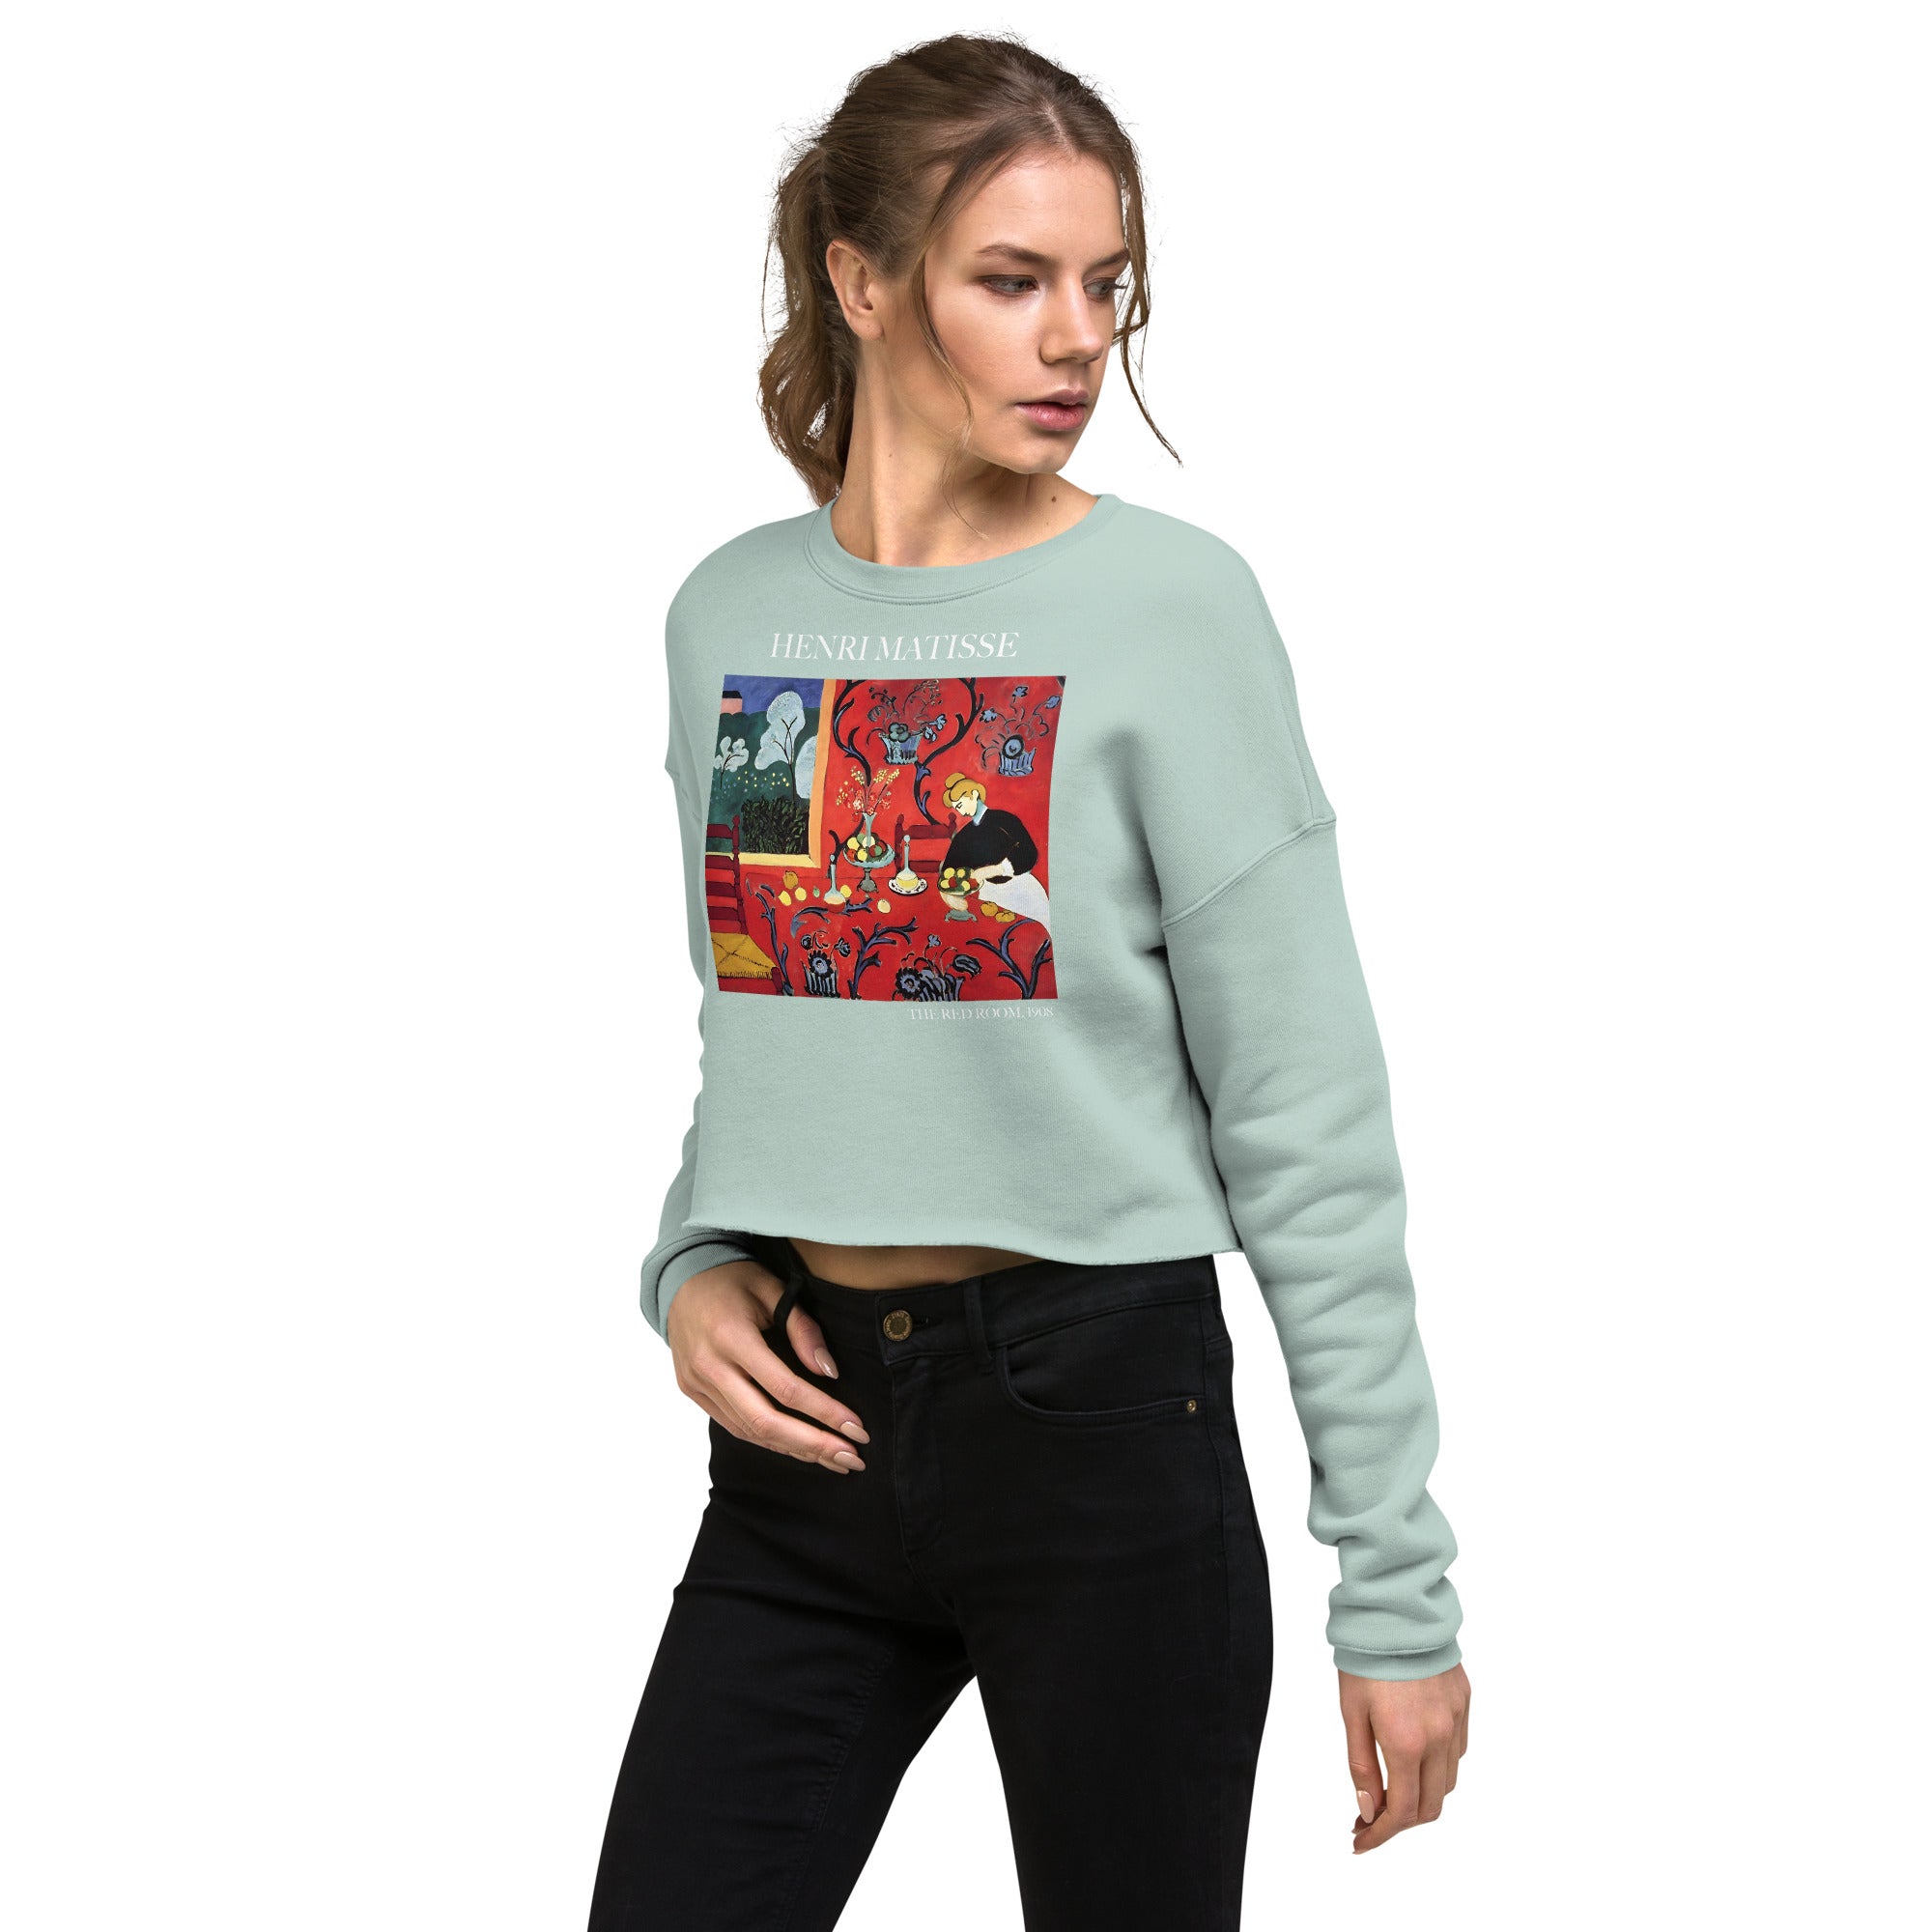 Henri Matisse 'The Red Room' Famous Painting Cropped Sweatshirt | Premium Art Cropped Sweatshirt